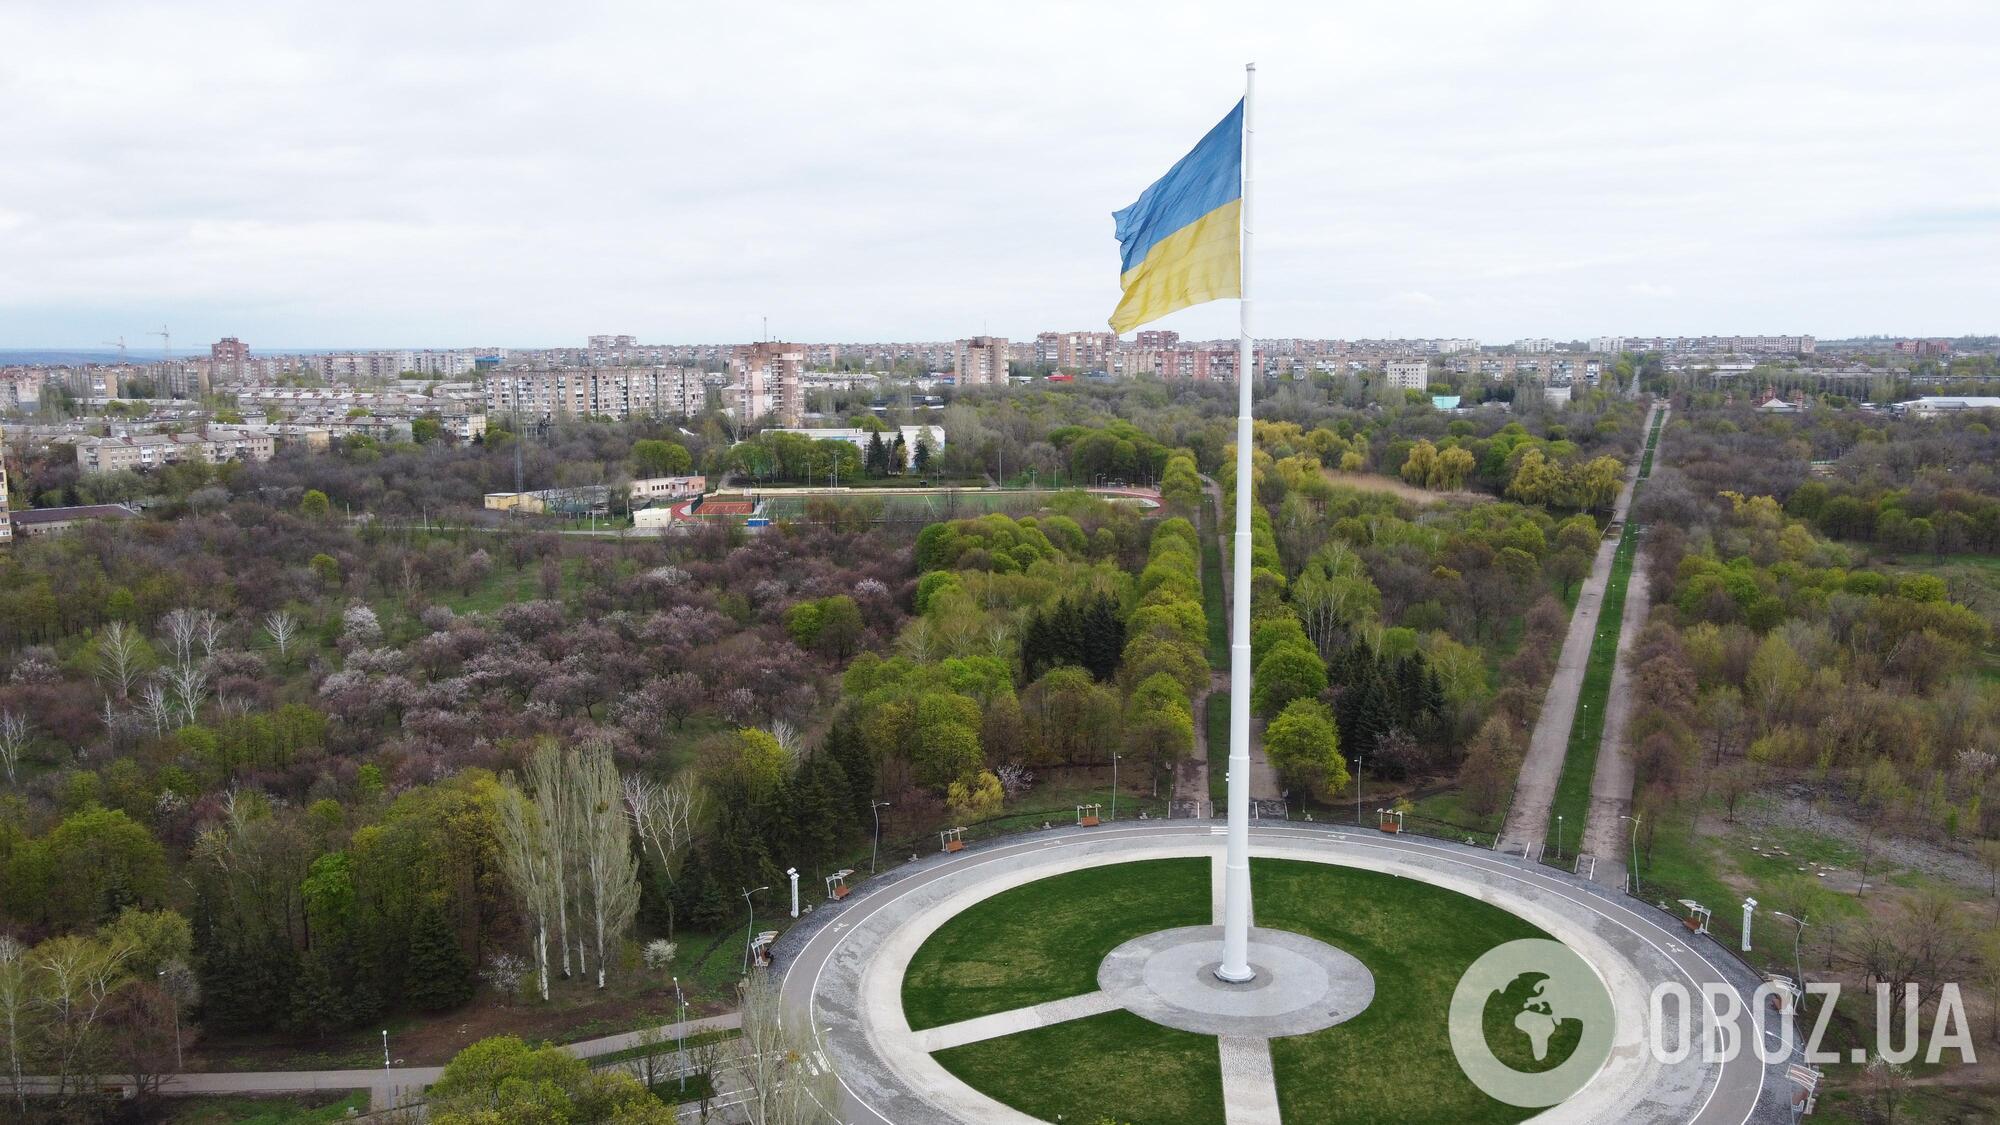 Український прапор над містом